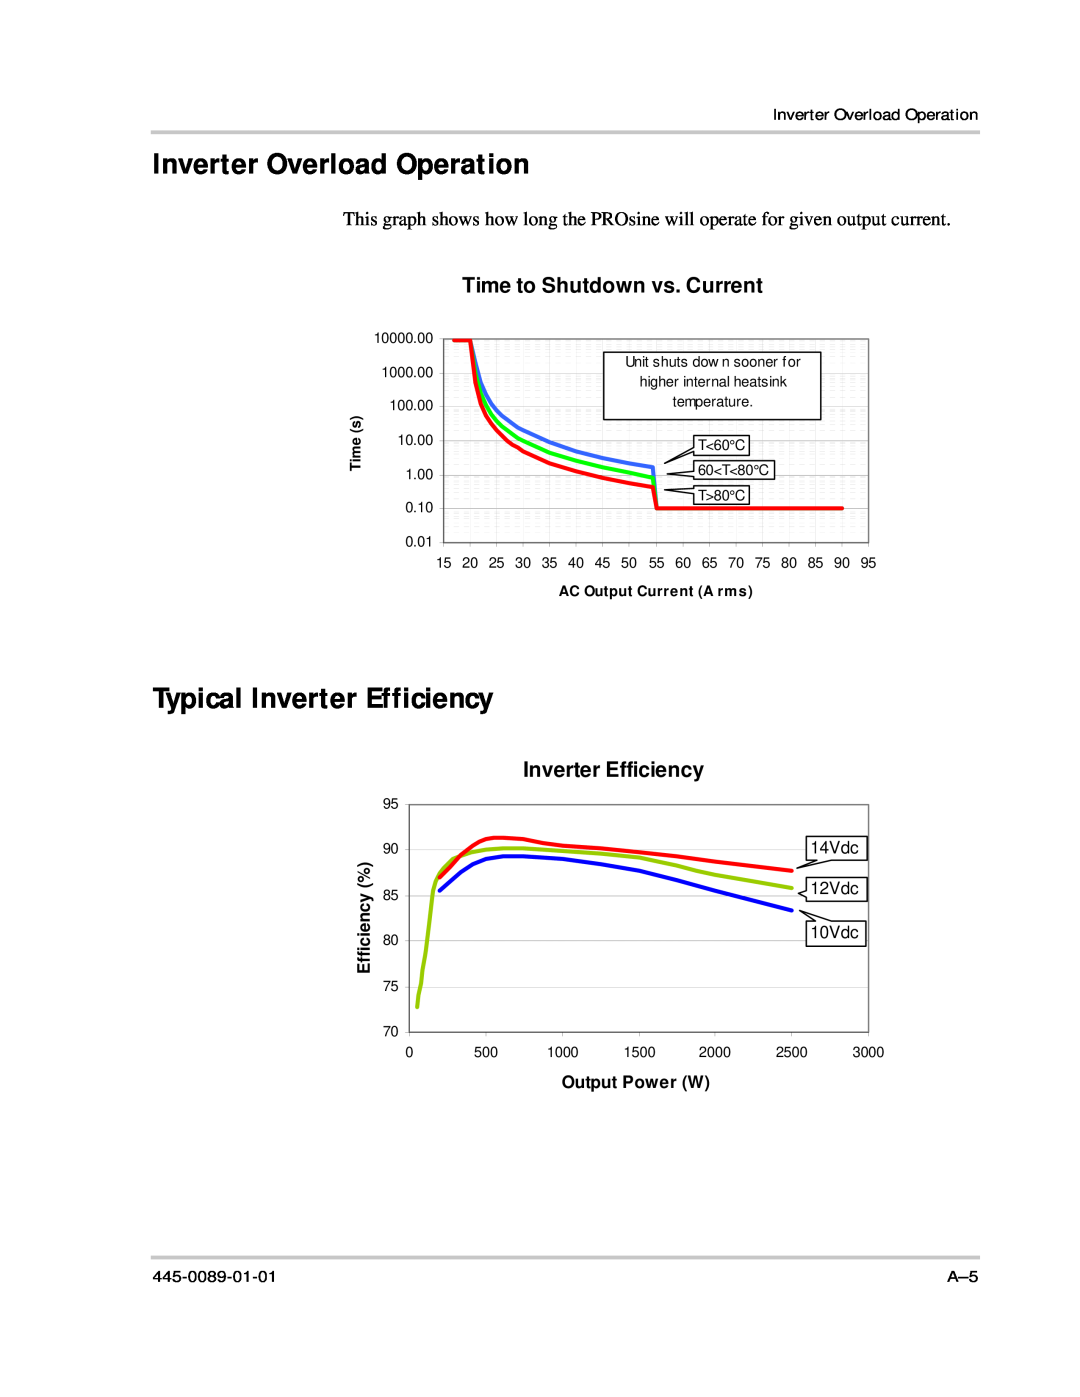 Xantrex Technology PROsine 2.0 Inverter Overload Operation, Typical Inverter Efficiency, Time to Shutdown vs. Current 